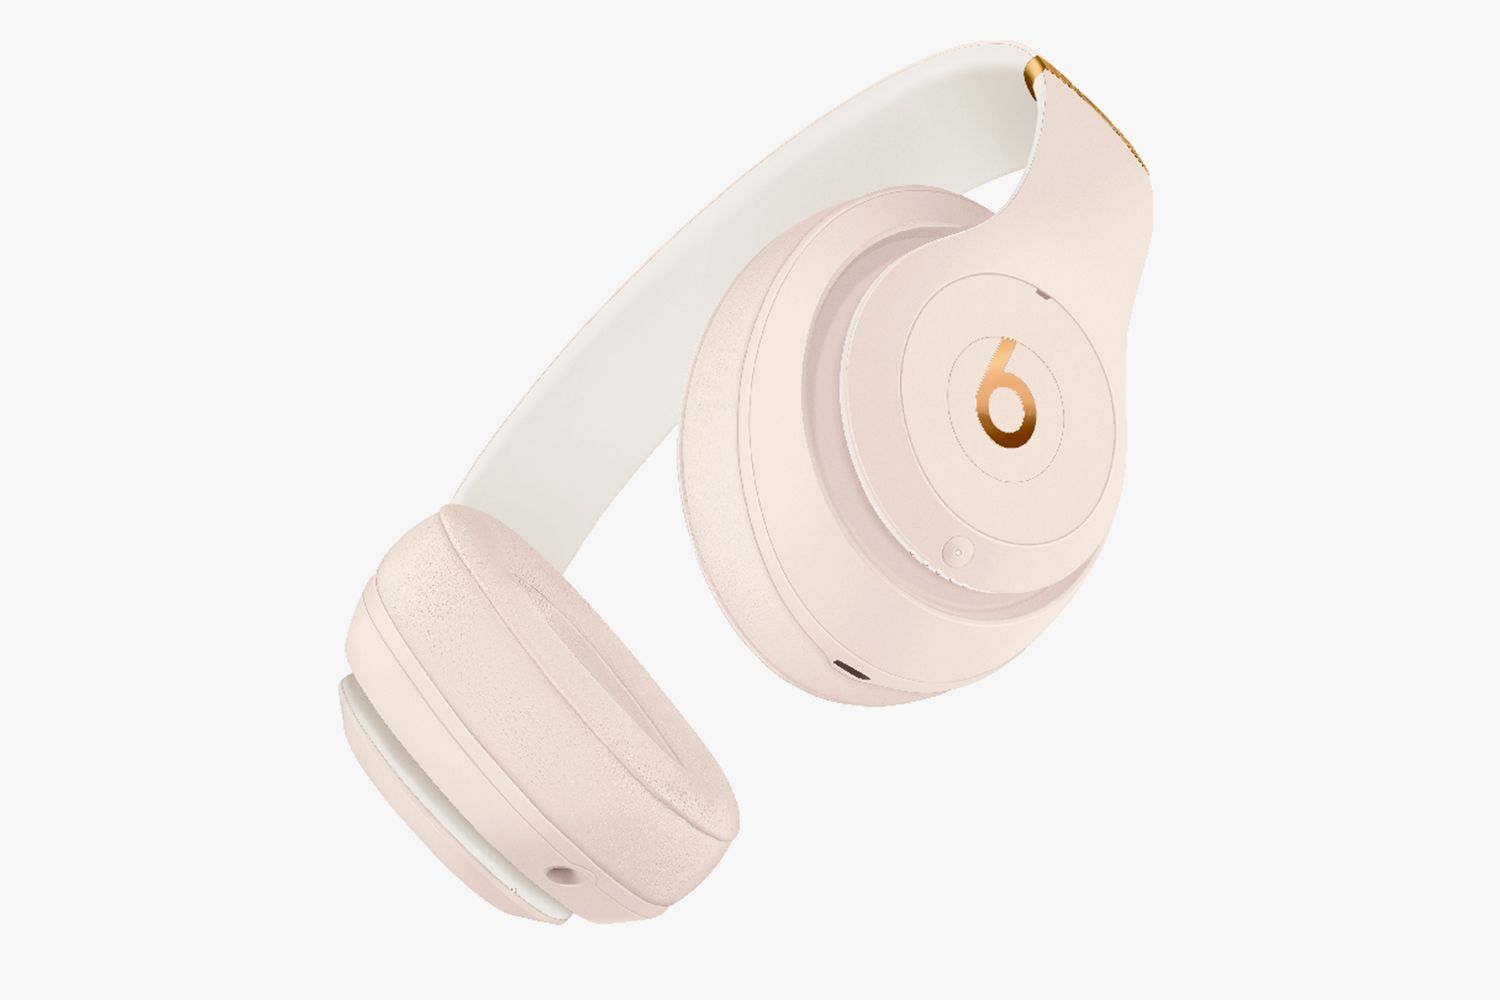 Beats Announces New Studio3 Wireless Headphones - Beats Studio3